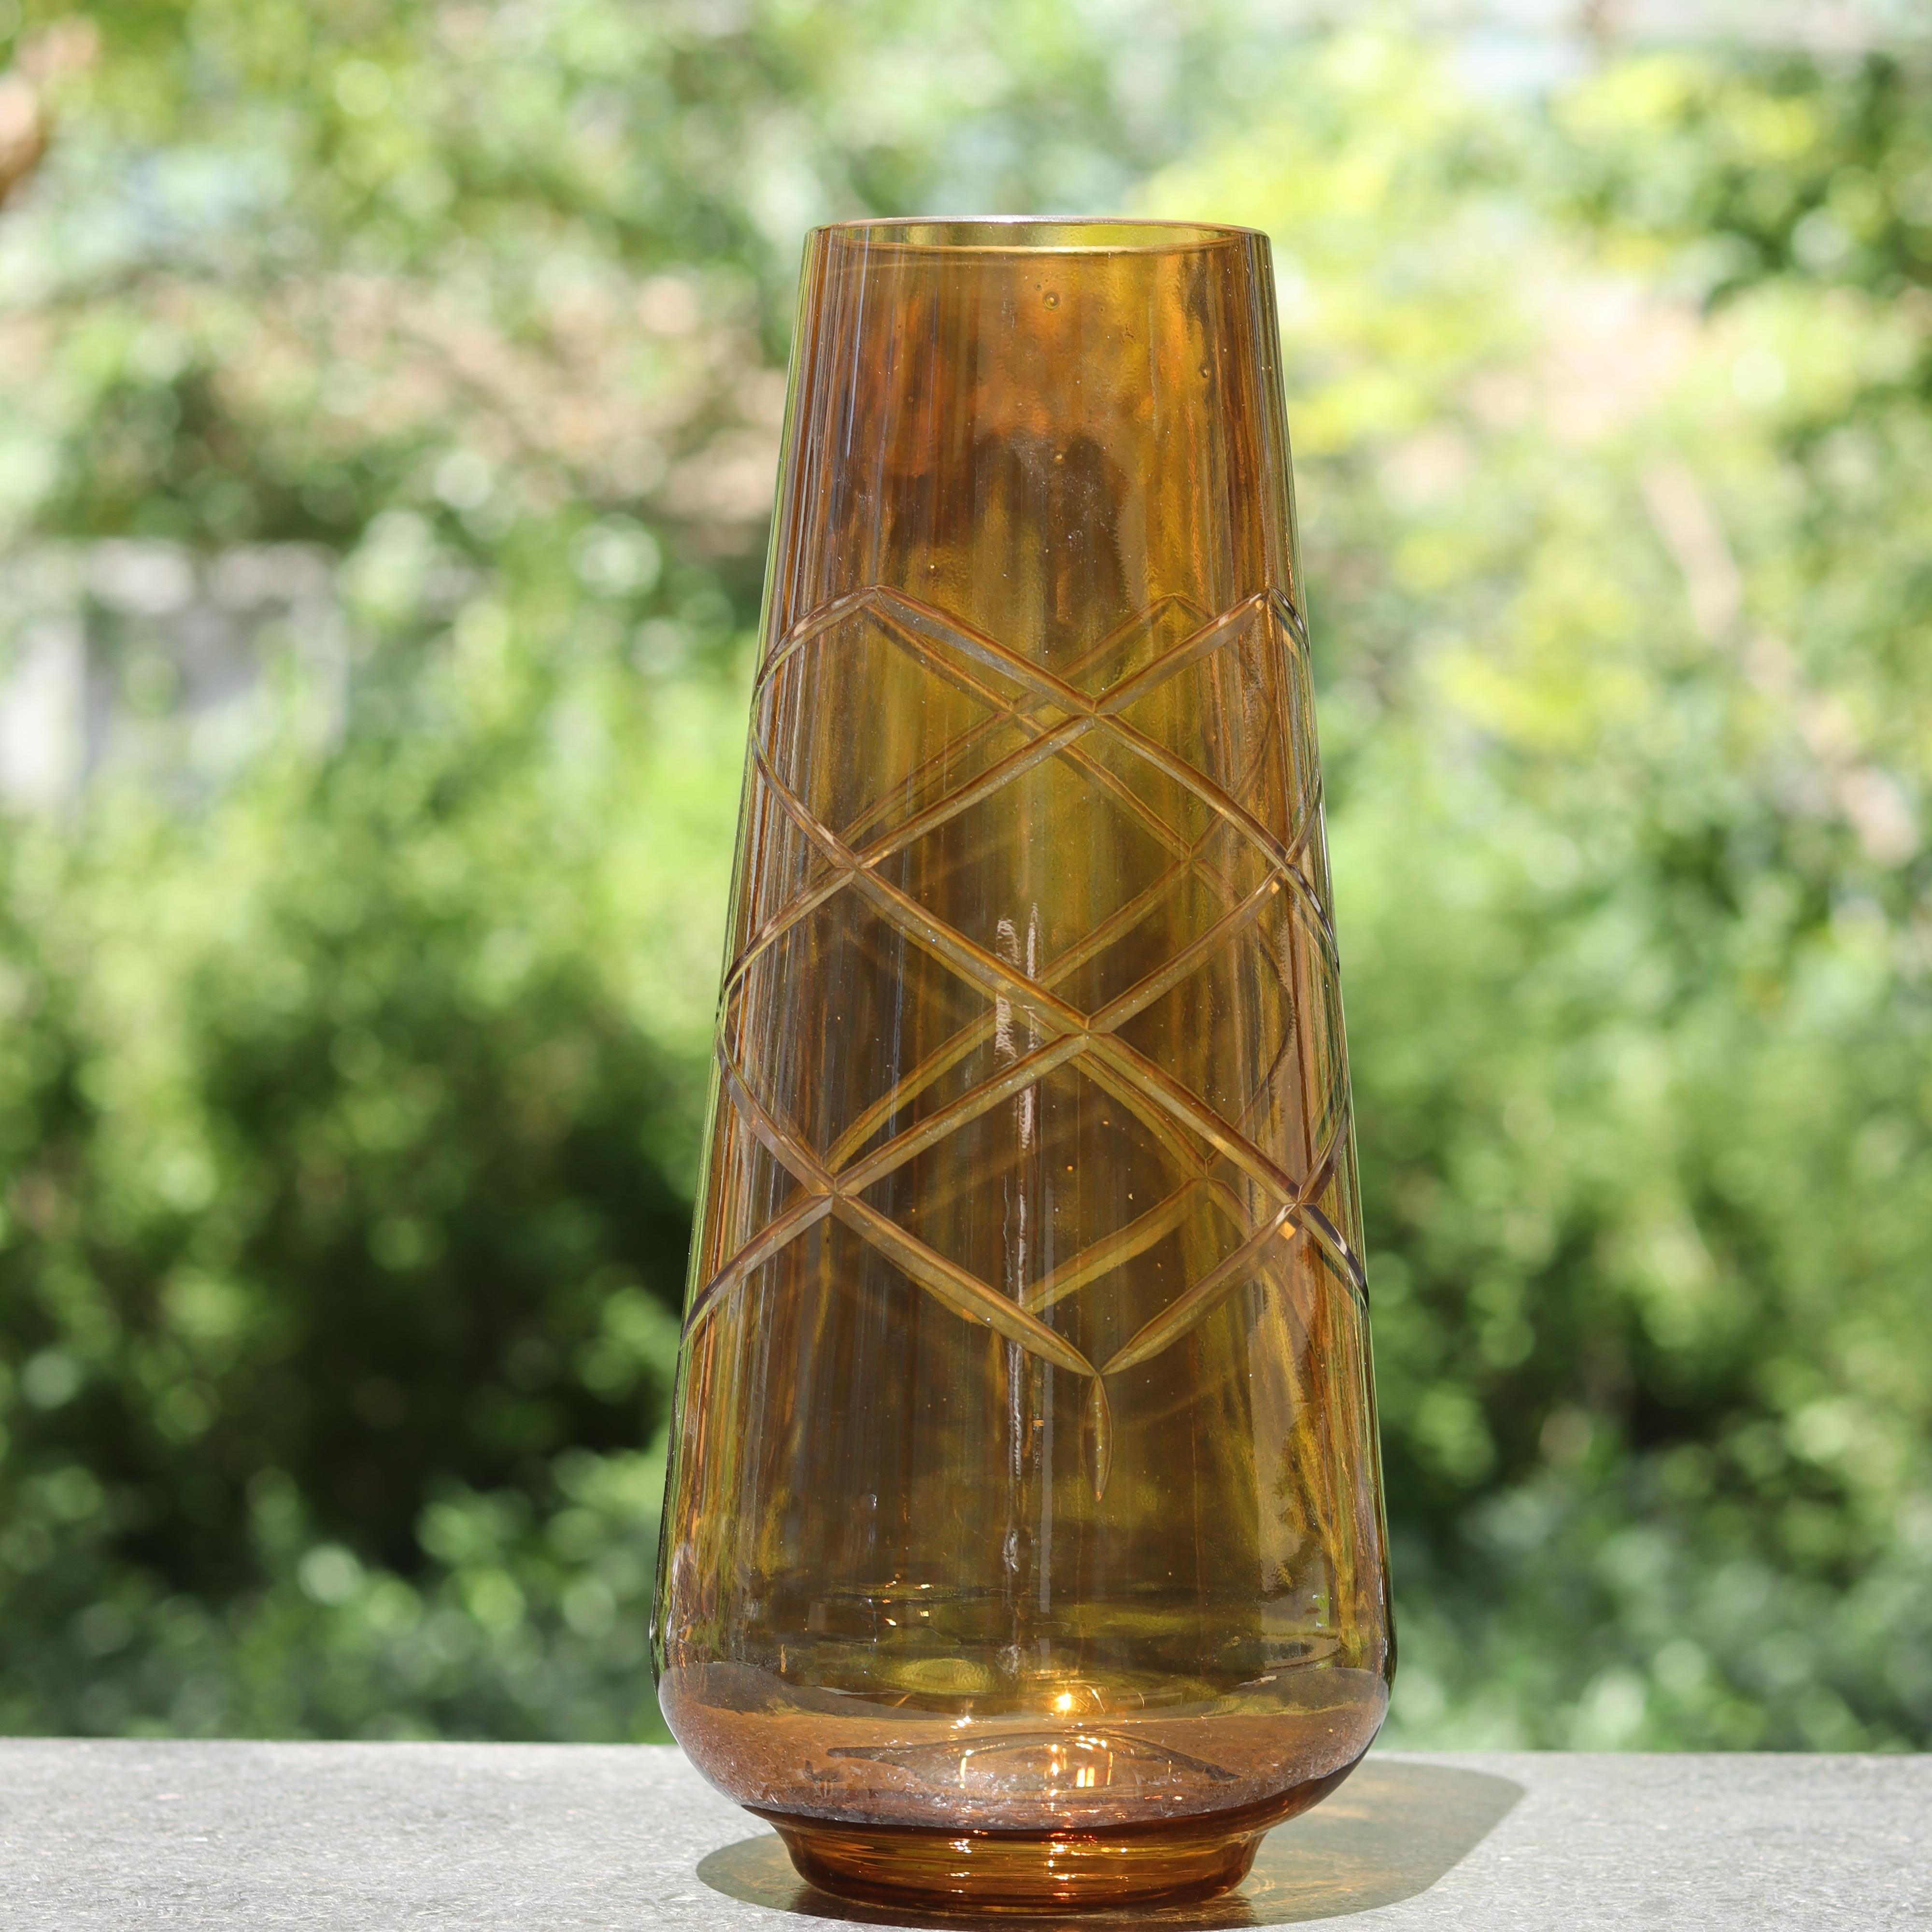 2K1M Girata, Murano Glass Vases - Moka Colour - Made on the Island of Murano For Sale 2